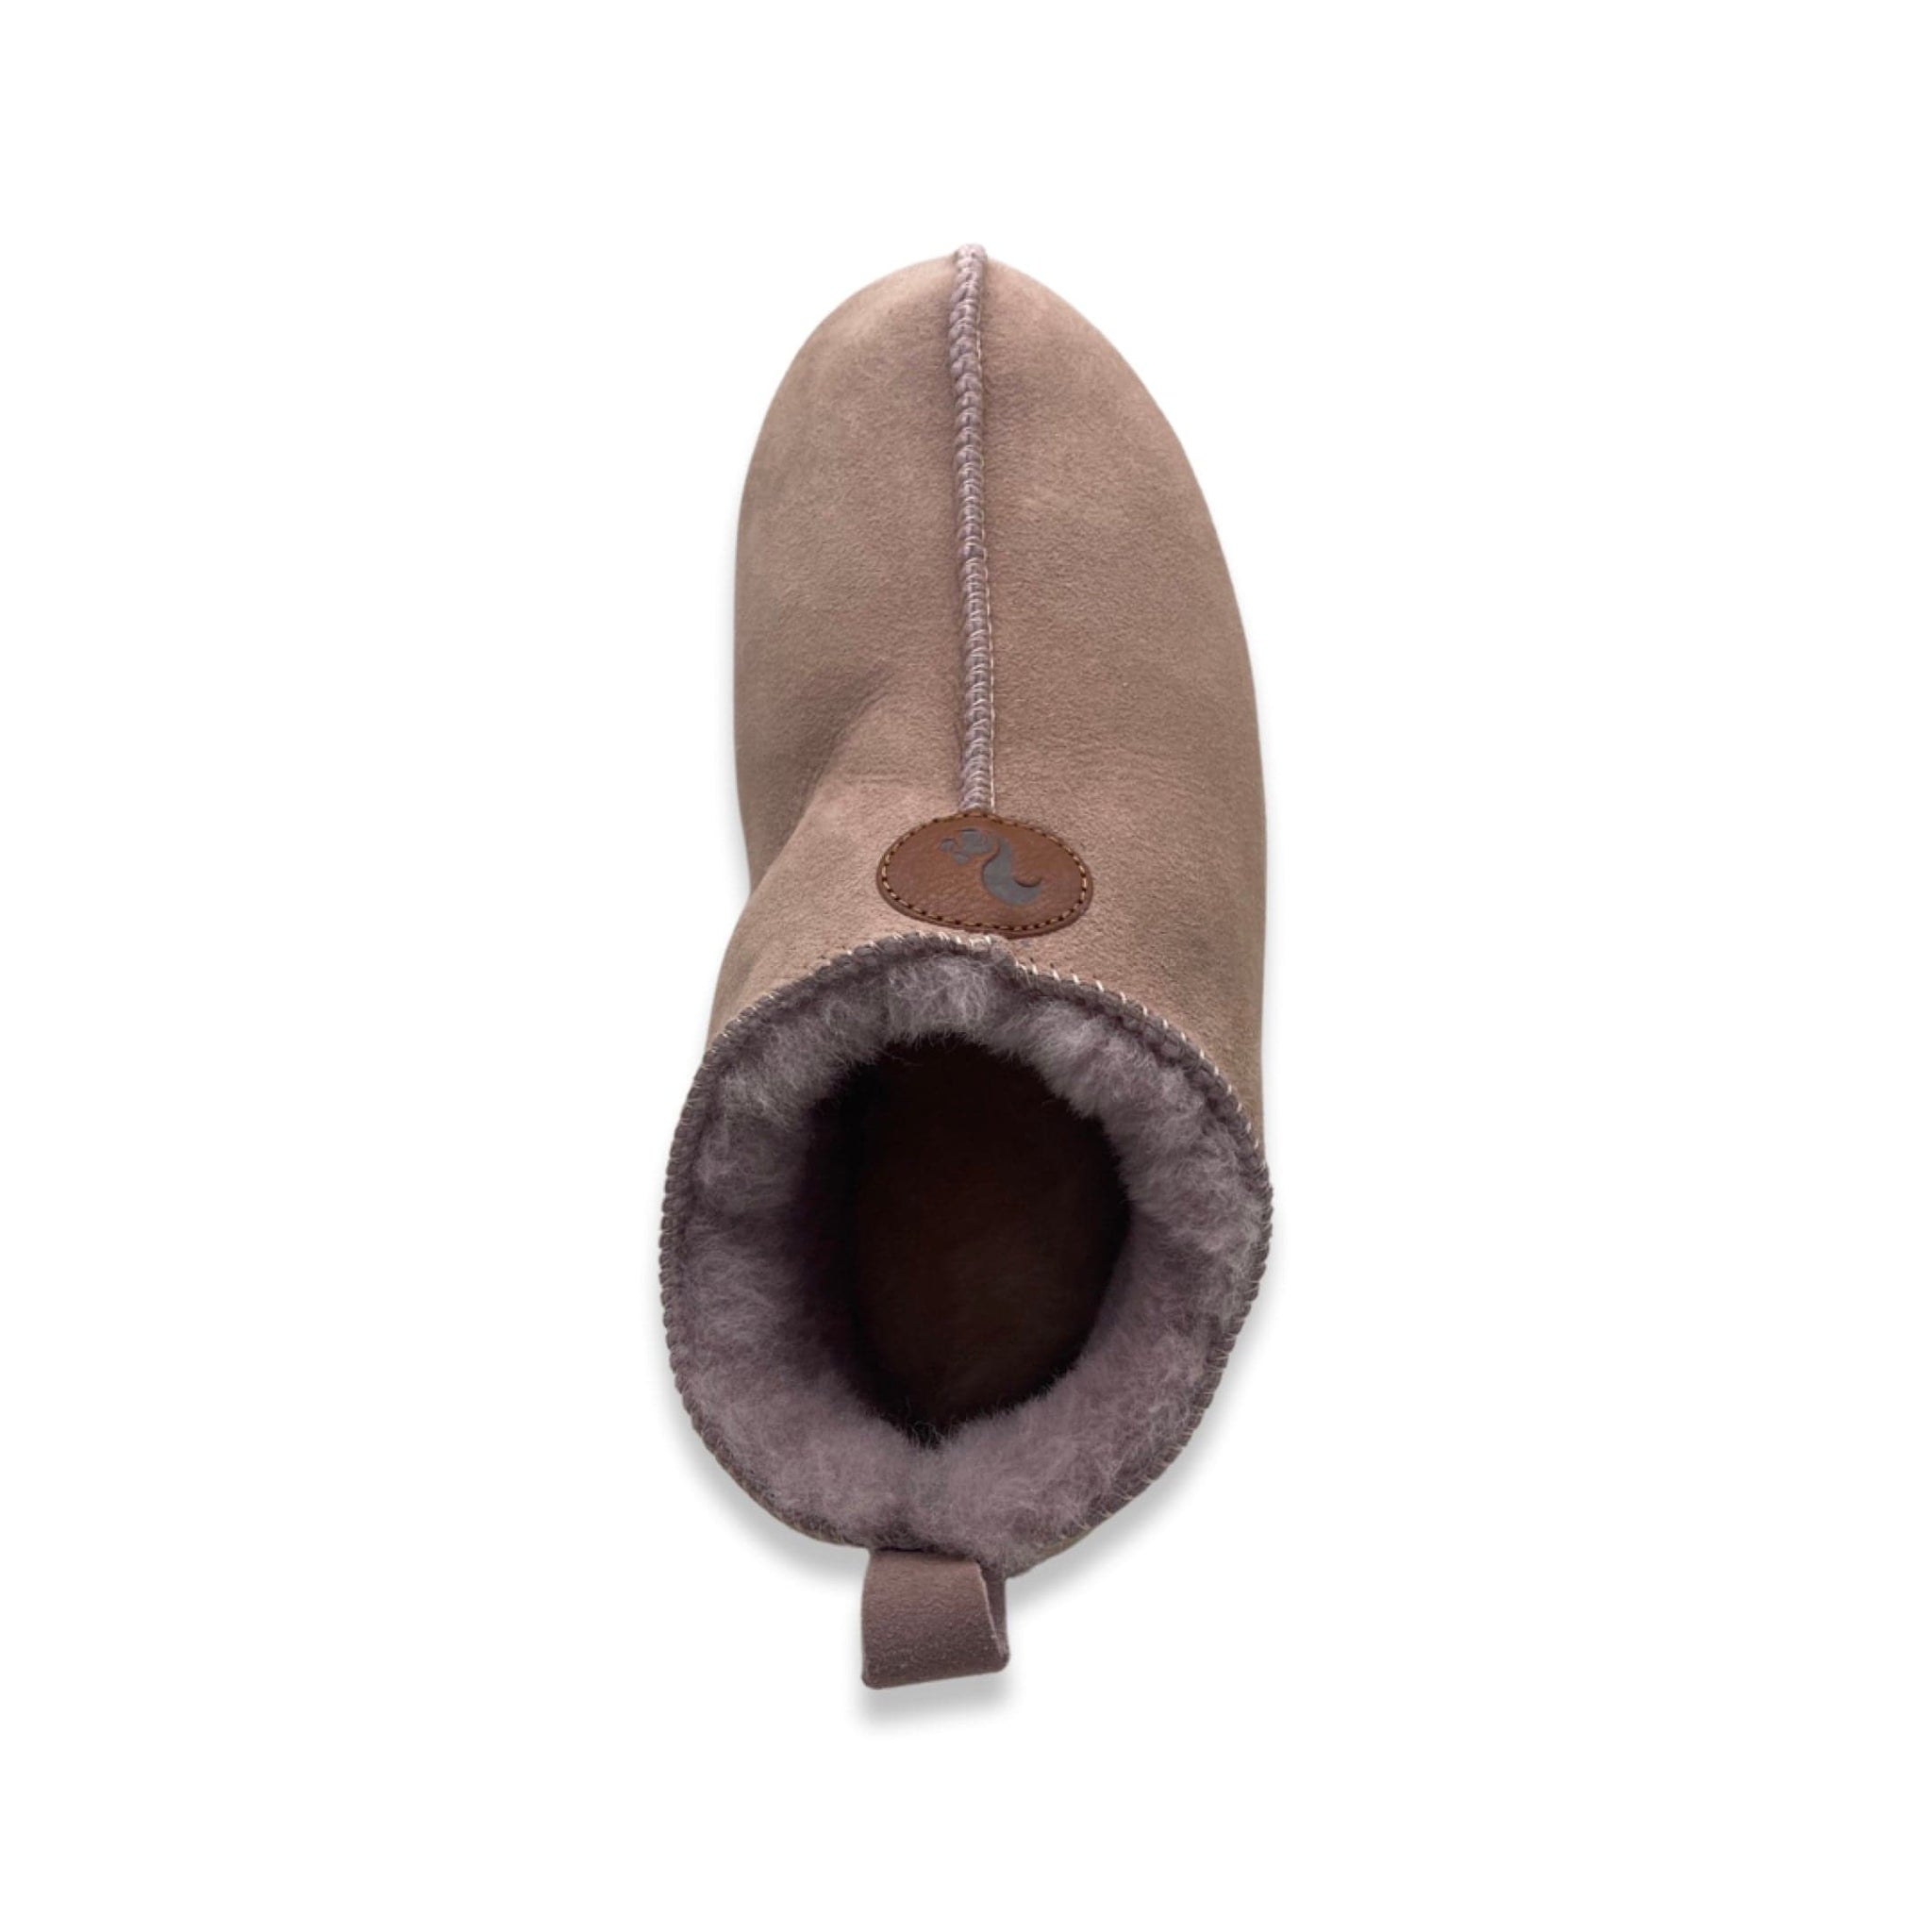 NAT 2 fodtøj thies 1856 ® Sheep Slipper Boot ny pink (W) bæredygtig mode etisk mode